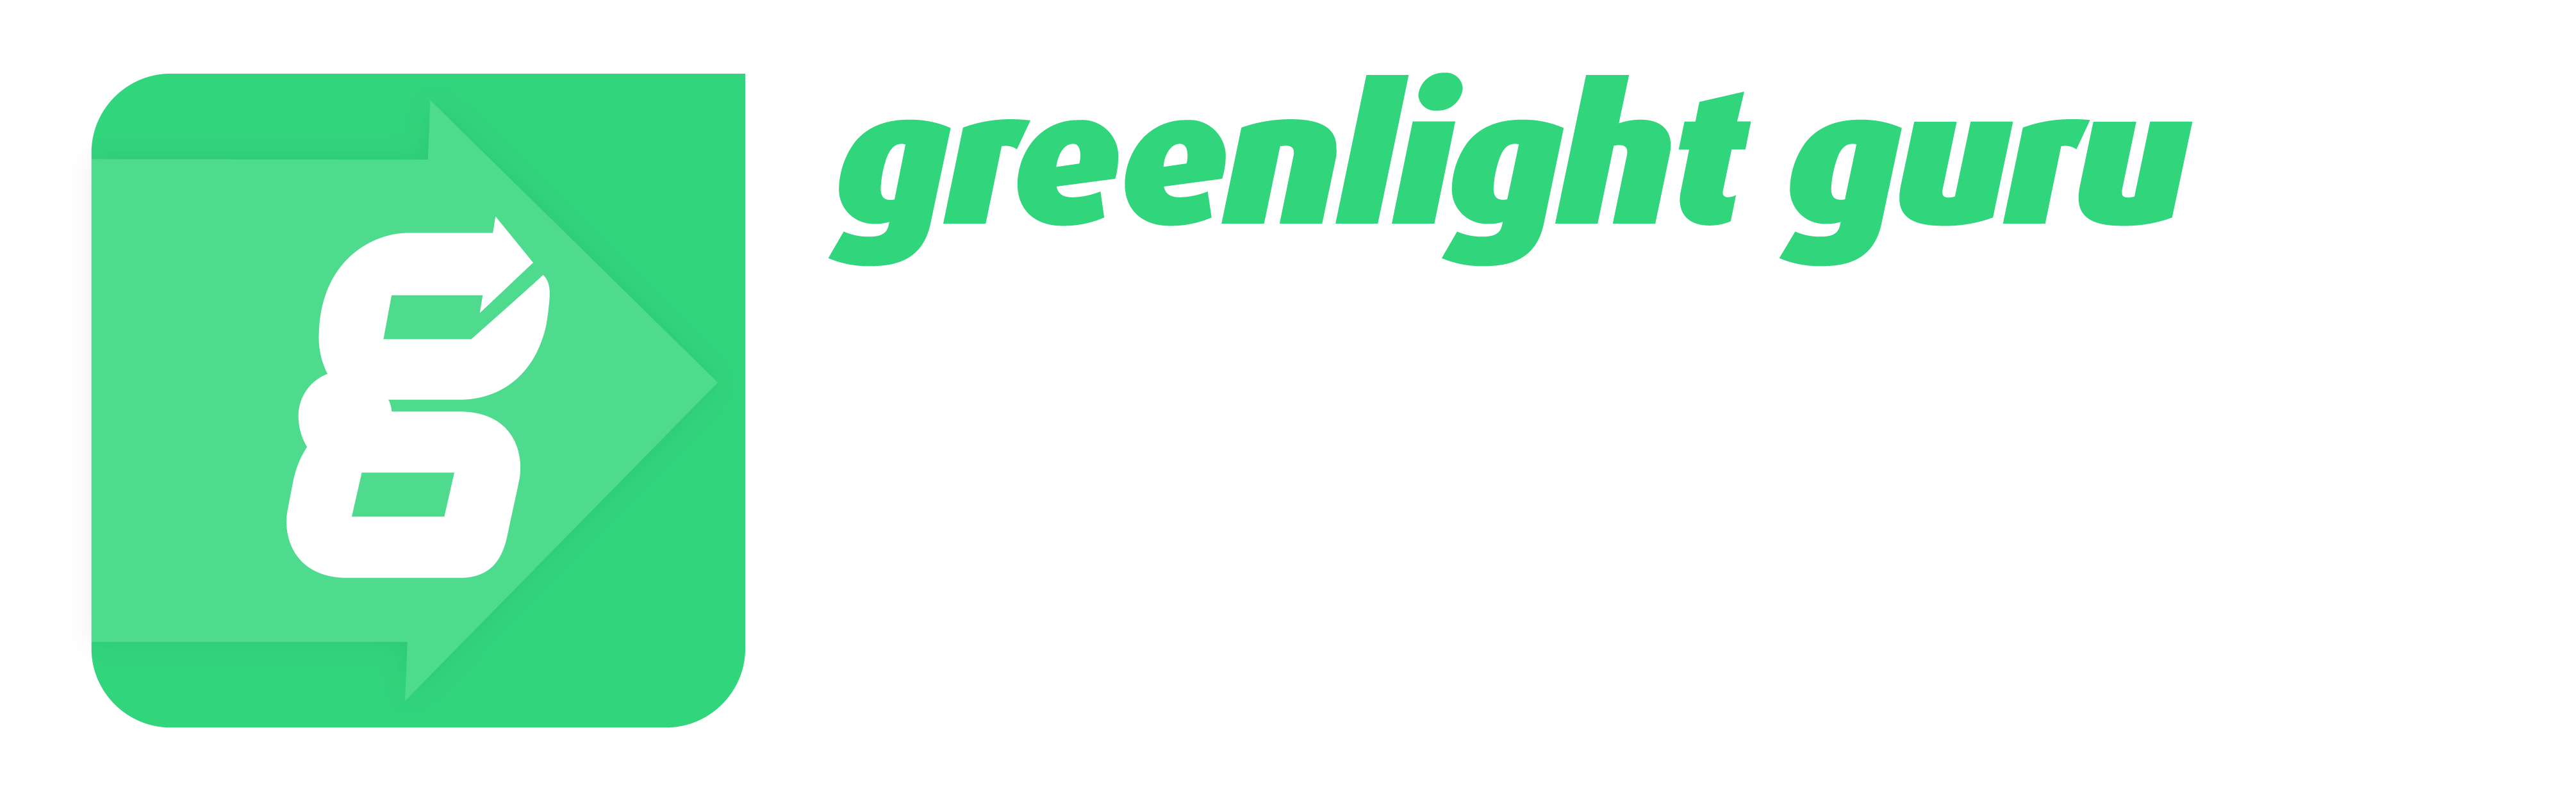 homepage greenlight guru quality logo